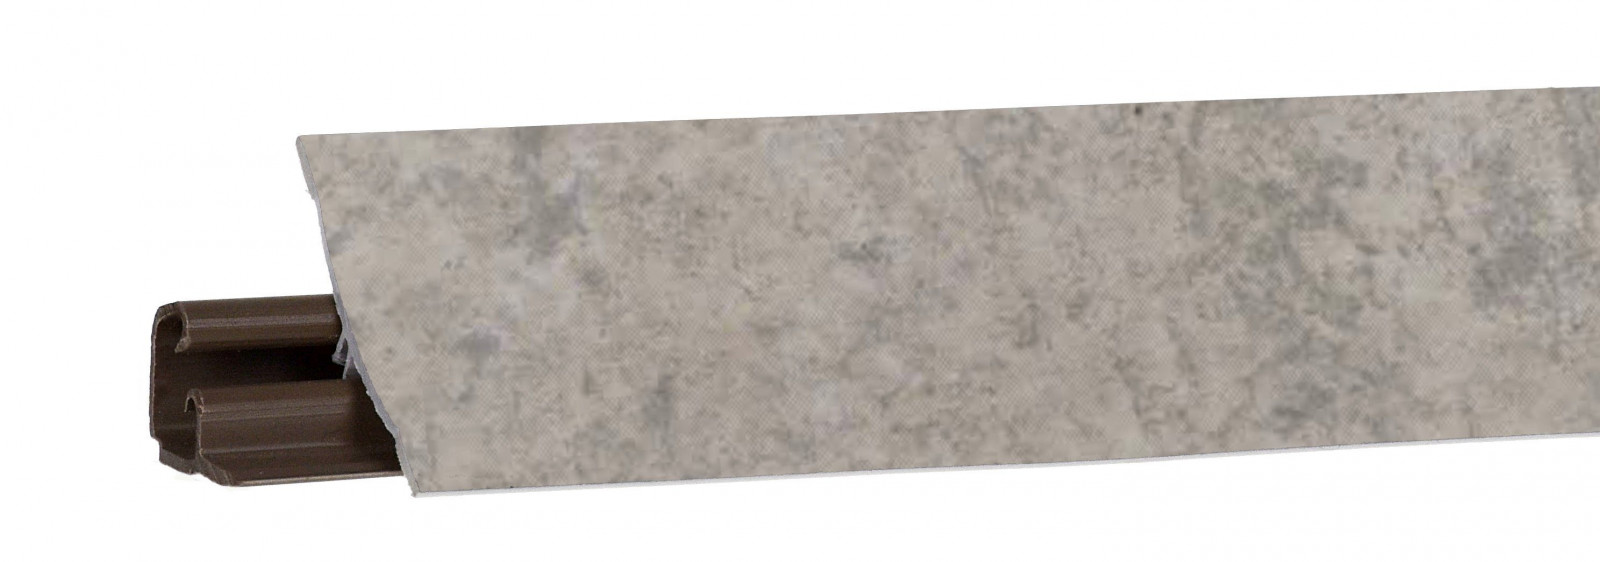 Плинтус пристенный, неолит серый LB-231-686 3,0 м - фото - 1